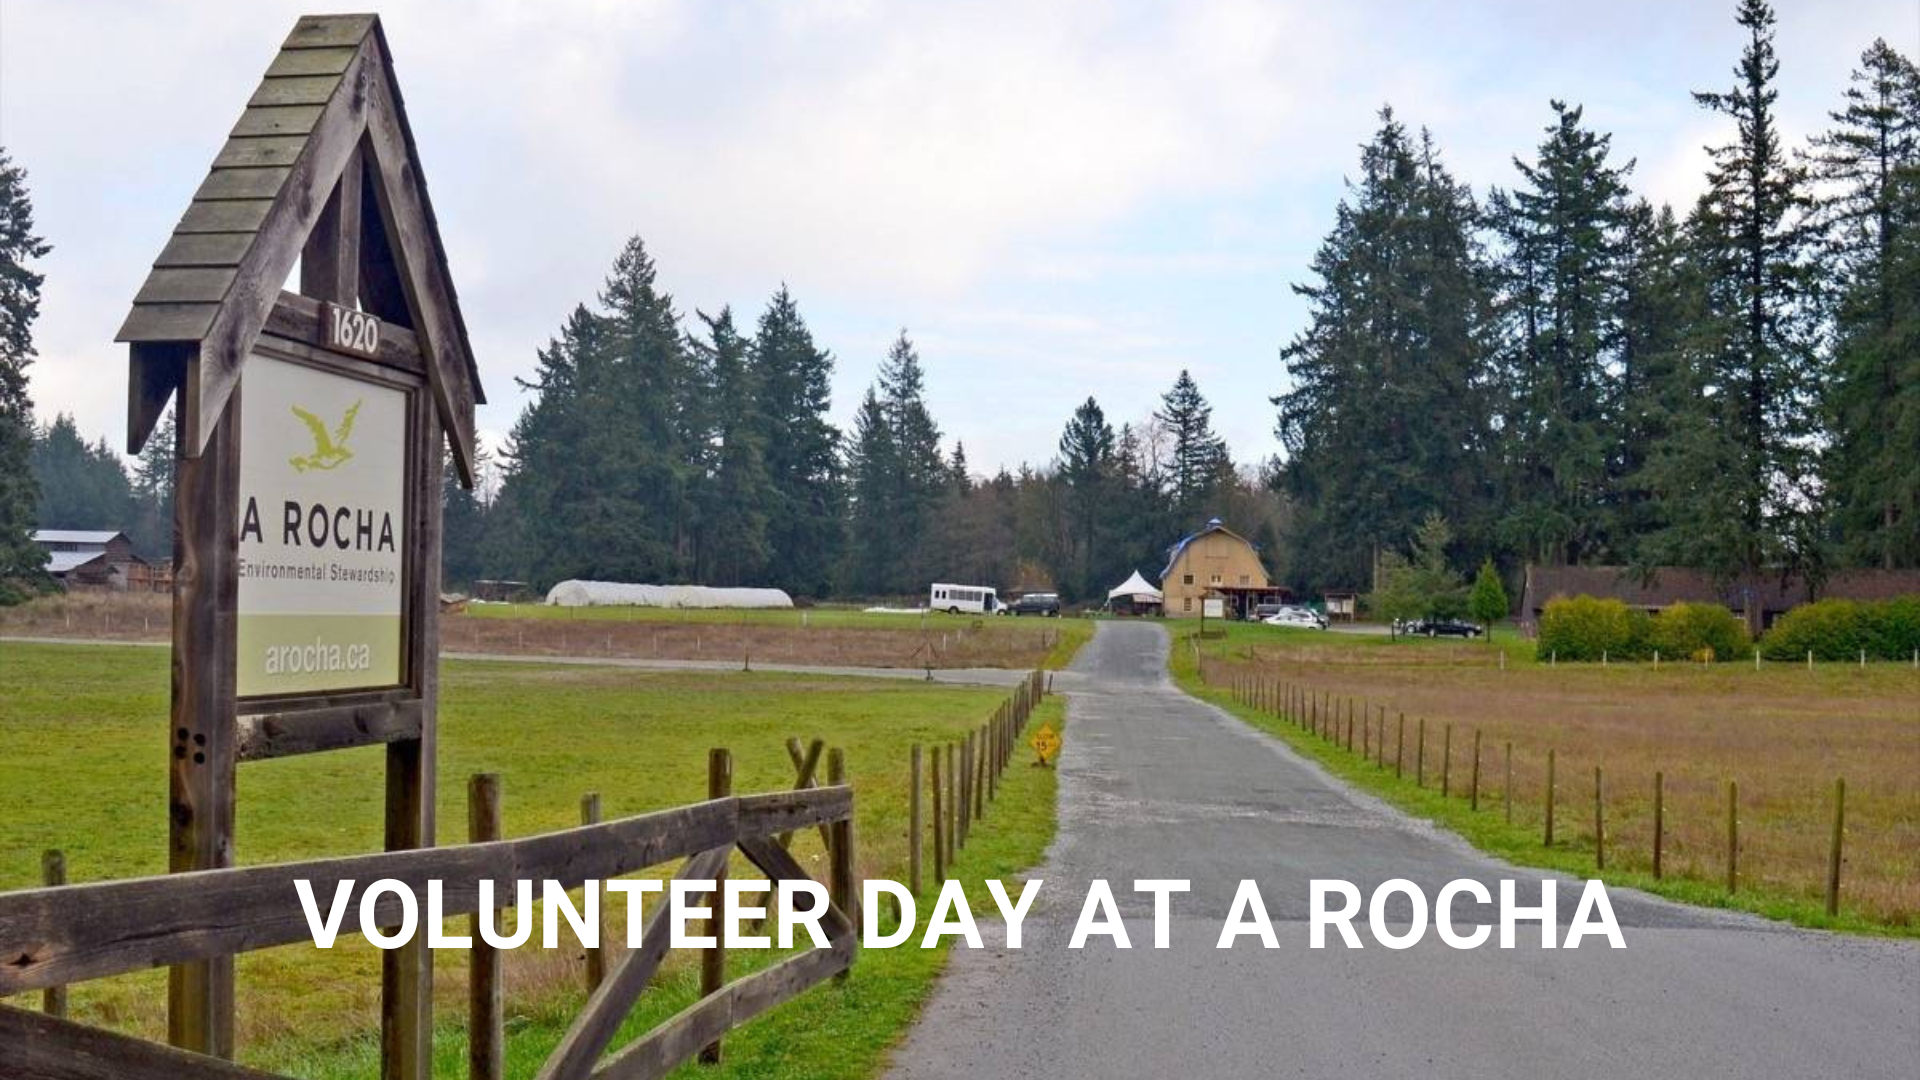 A Rocha Volunteer Day